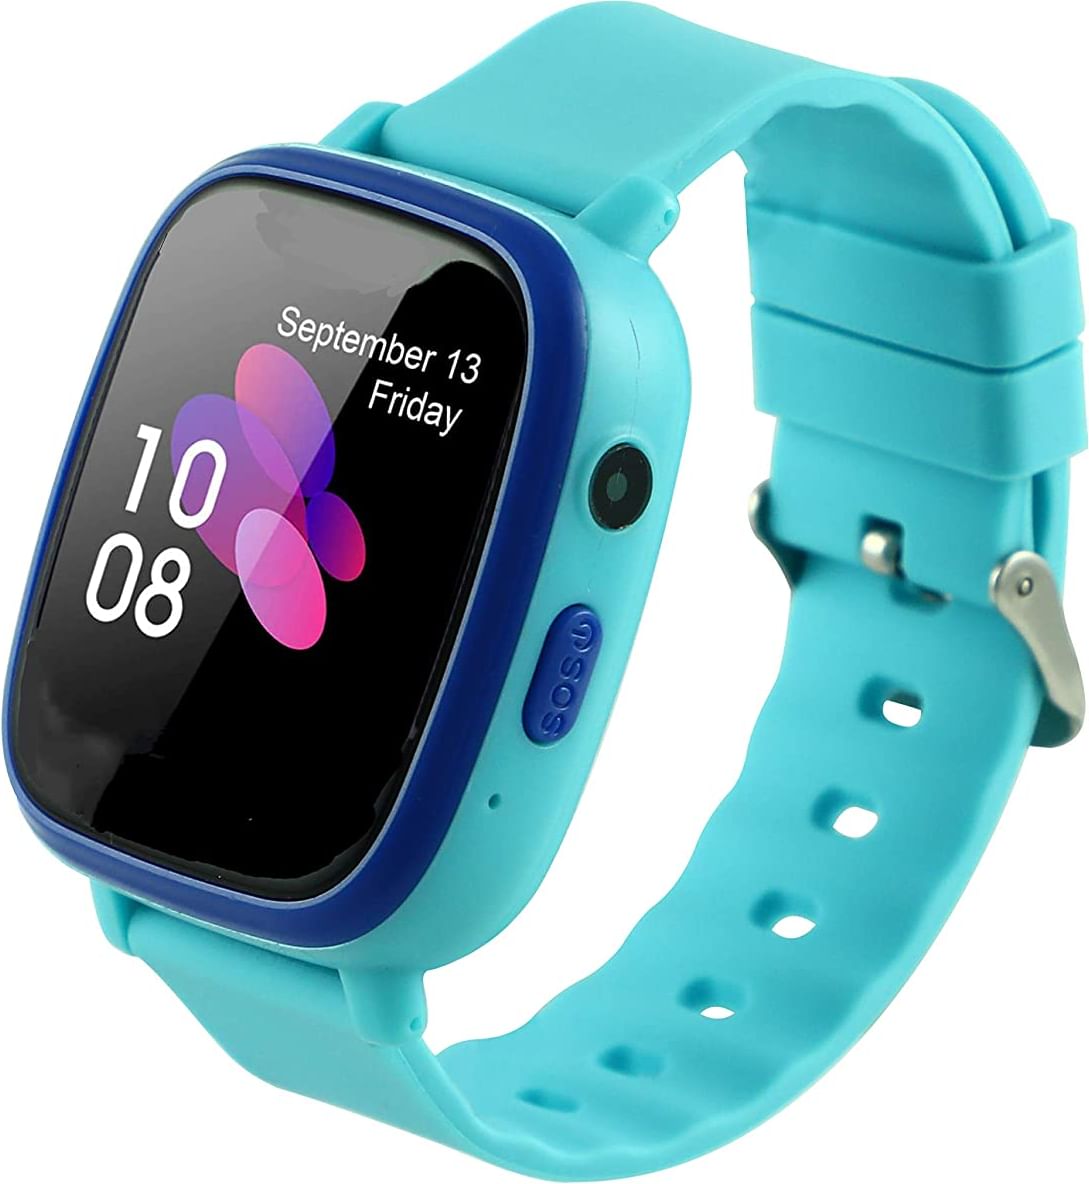 realme smart watch 2 under 1500 rupees is the best budget smartwatch deal  on flipkart - Tech news hindi - ऑफर! Realme Smartwatch केवल 1299 रुपये में,  डिजाइन और फीचर्स सब धांसू, गैजेट्स न्यूज